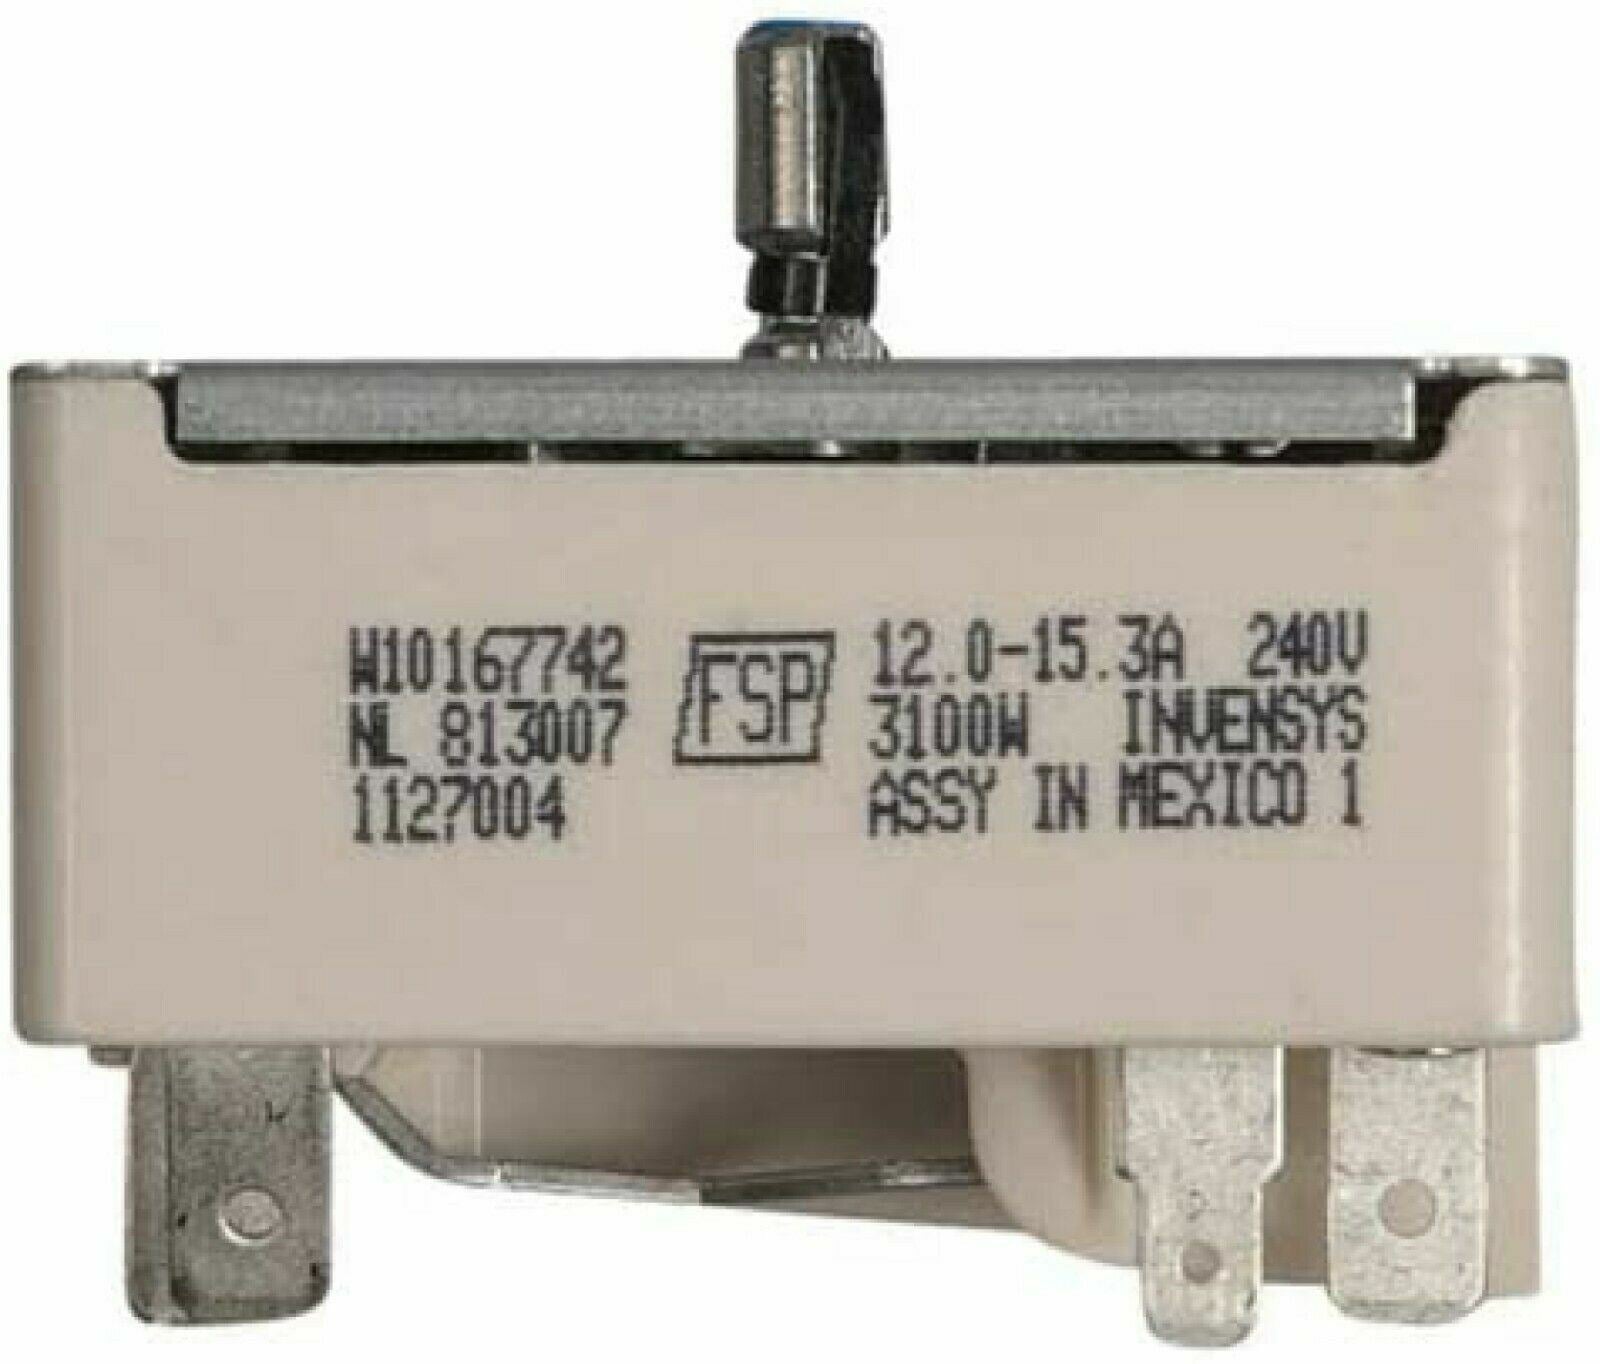 New OEM Genuine W10167742 Whirlpool Infinite Switch for Range